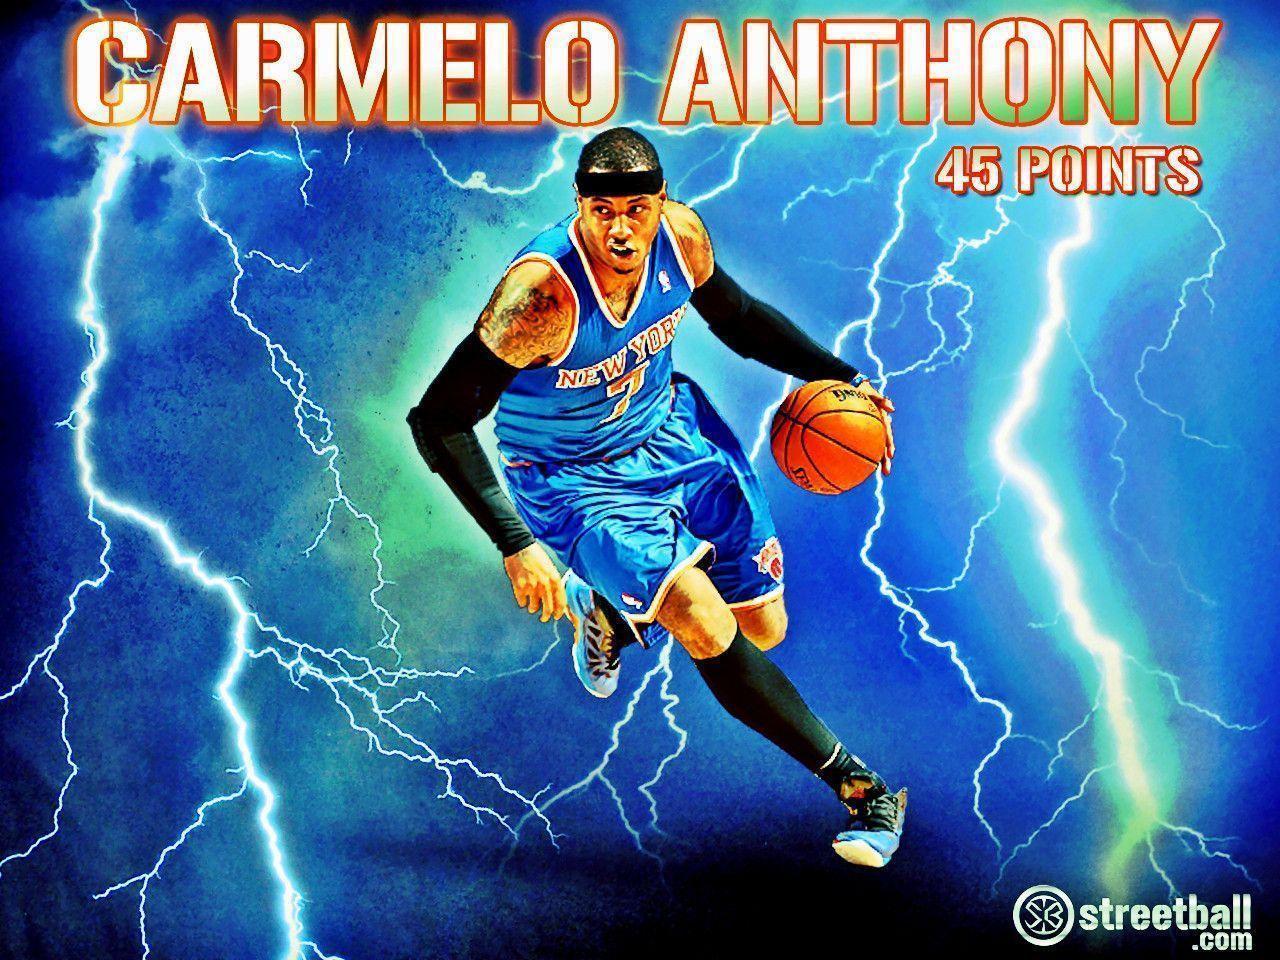 Carmelo Anthony Wallpaper 31 298499 Image HD Wallpaper. Wallfoy.com